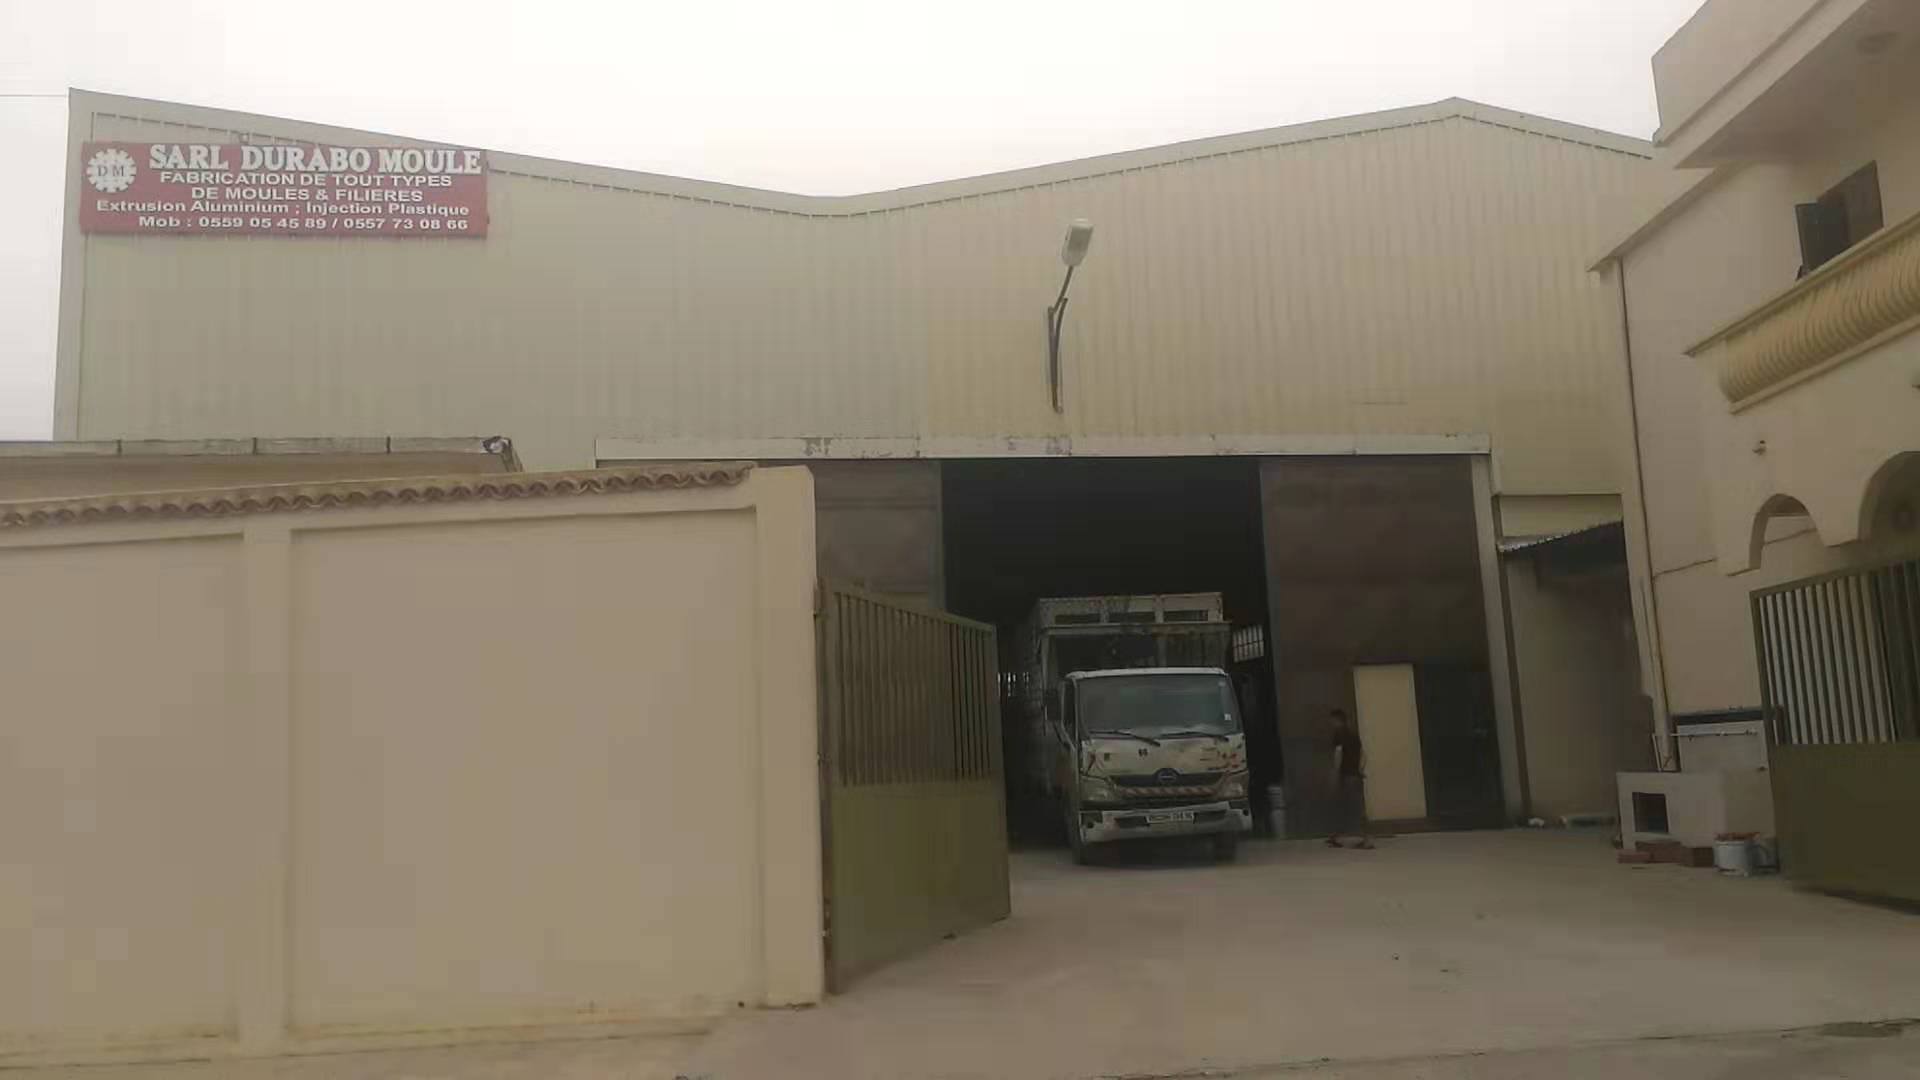 Taiye CNC Machine Tool Use On Site In Algeria